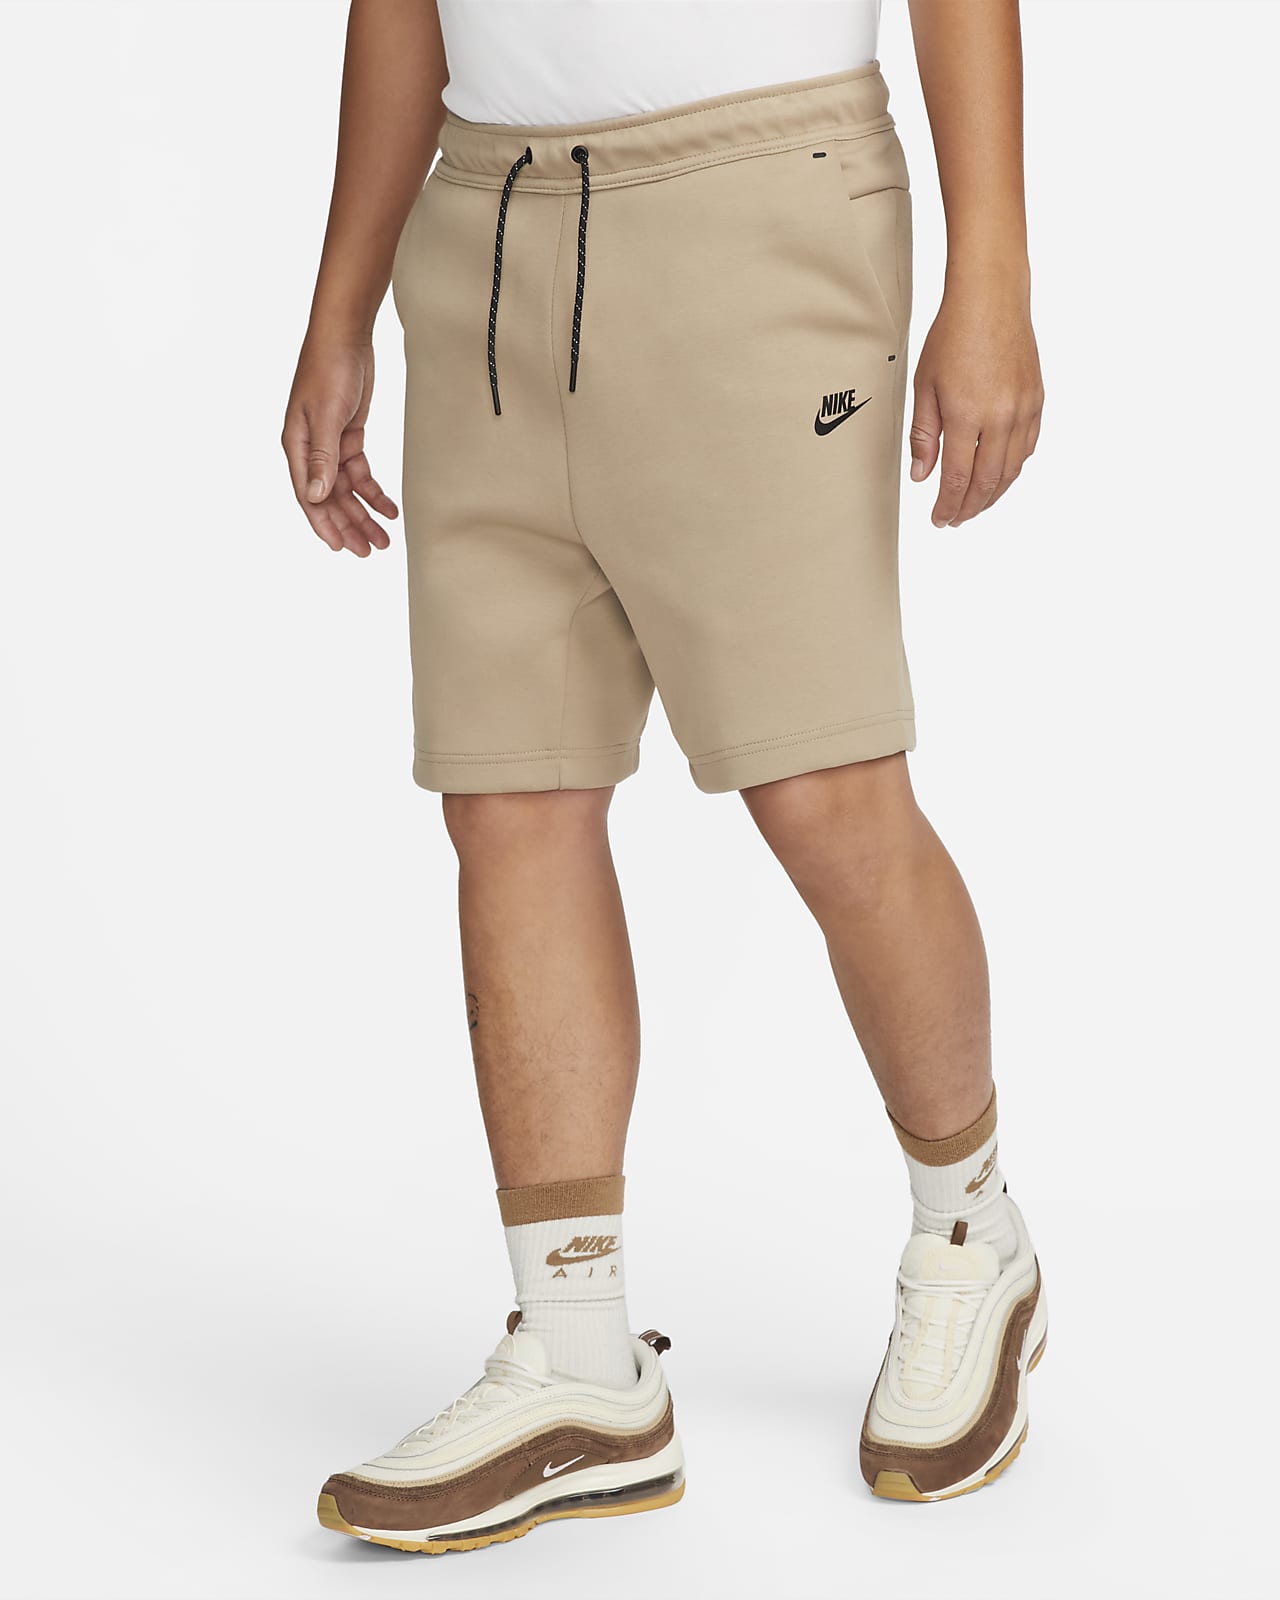 Leyenda Pensionista Beca Nike Sportswear Tech Fleece Men's Shorts. Nike.com